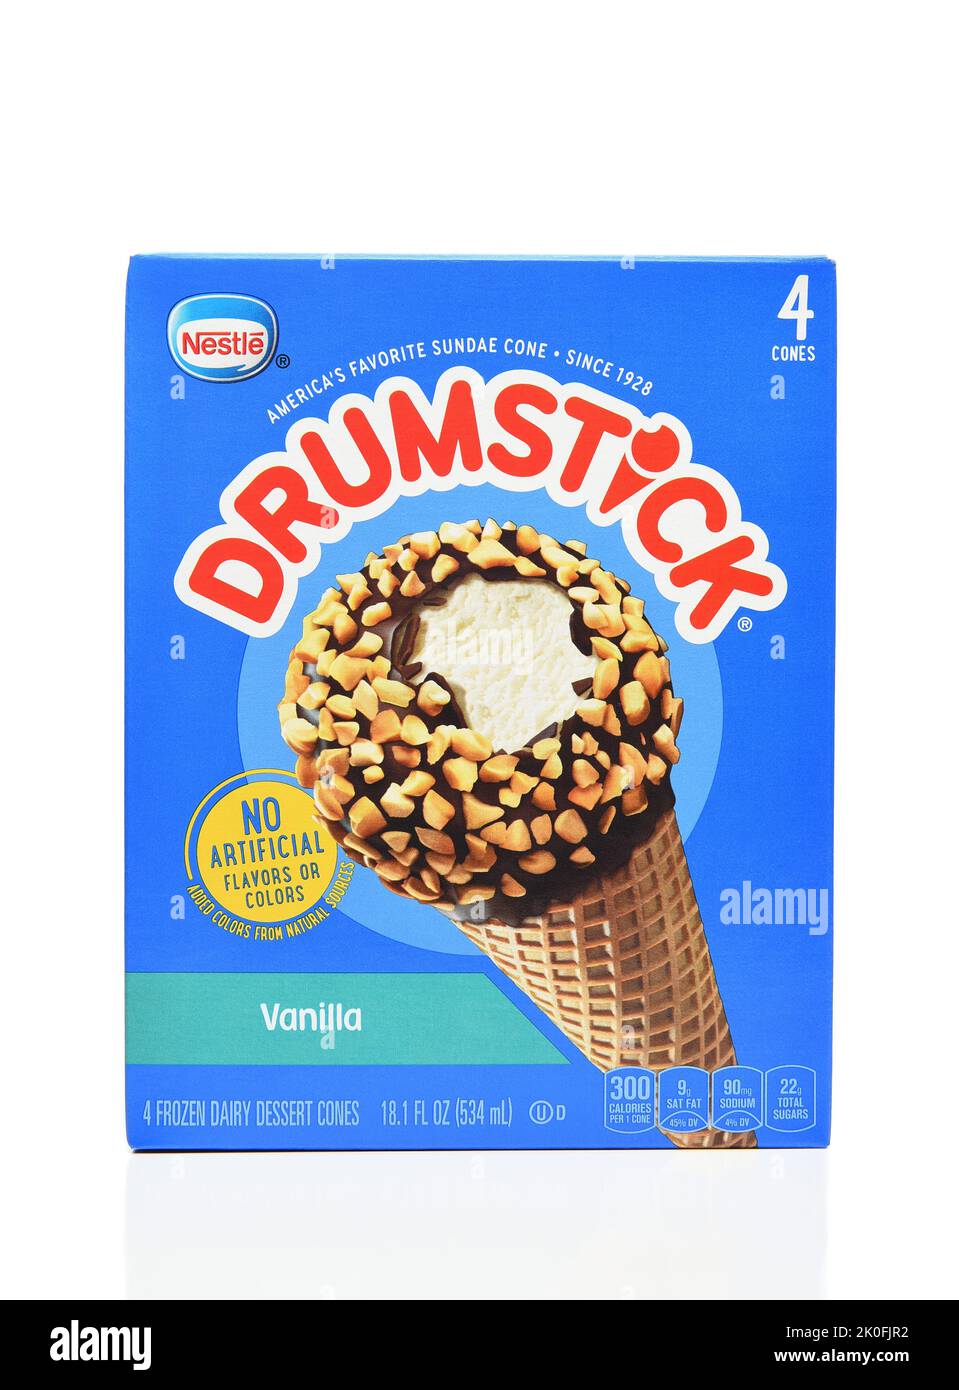 IRVINE, CALIFORNIA - 30 AGO 2022: Una caja de 4 paquetes de la marca original Vanilla Drumstick Ice Cream Novelty de Nestle. Foto de stock